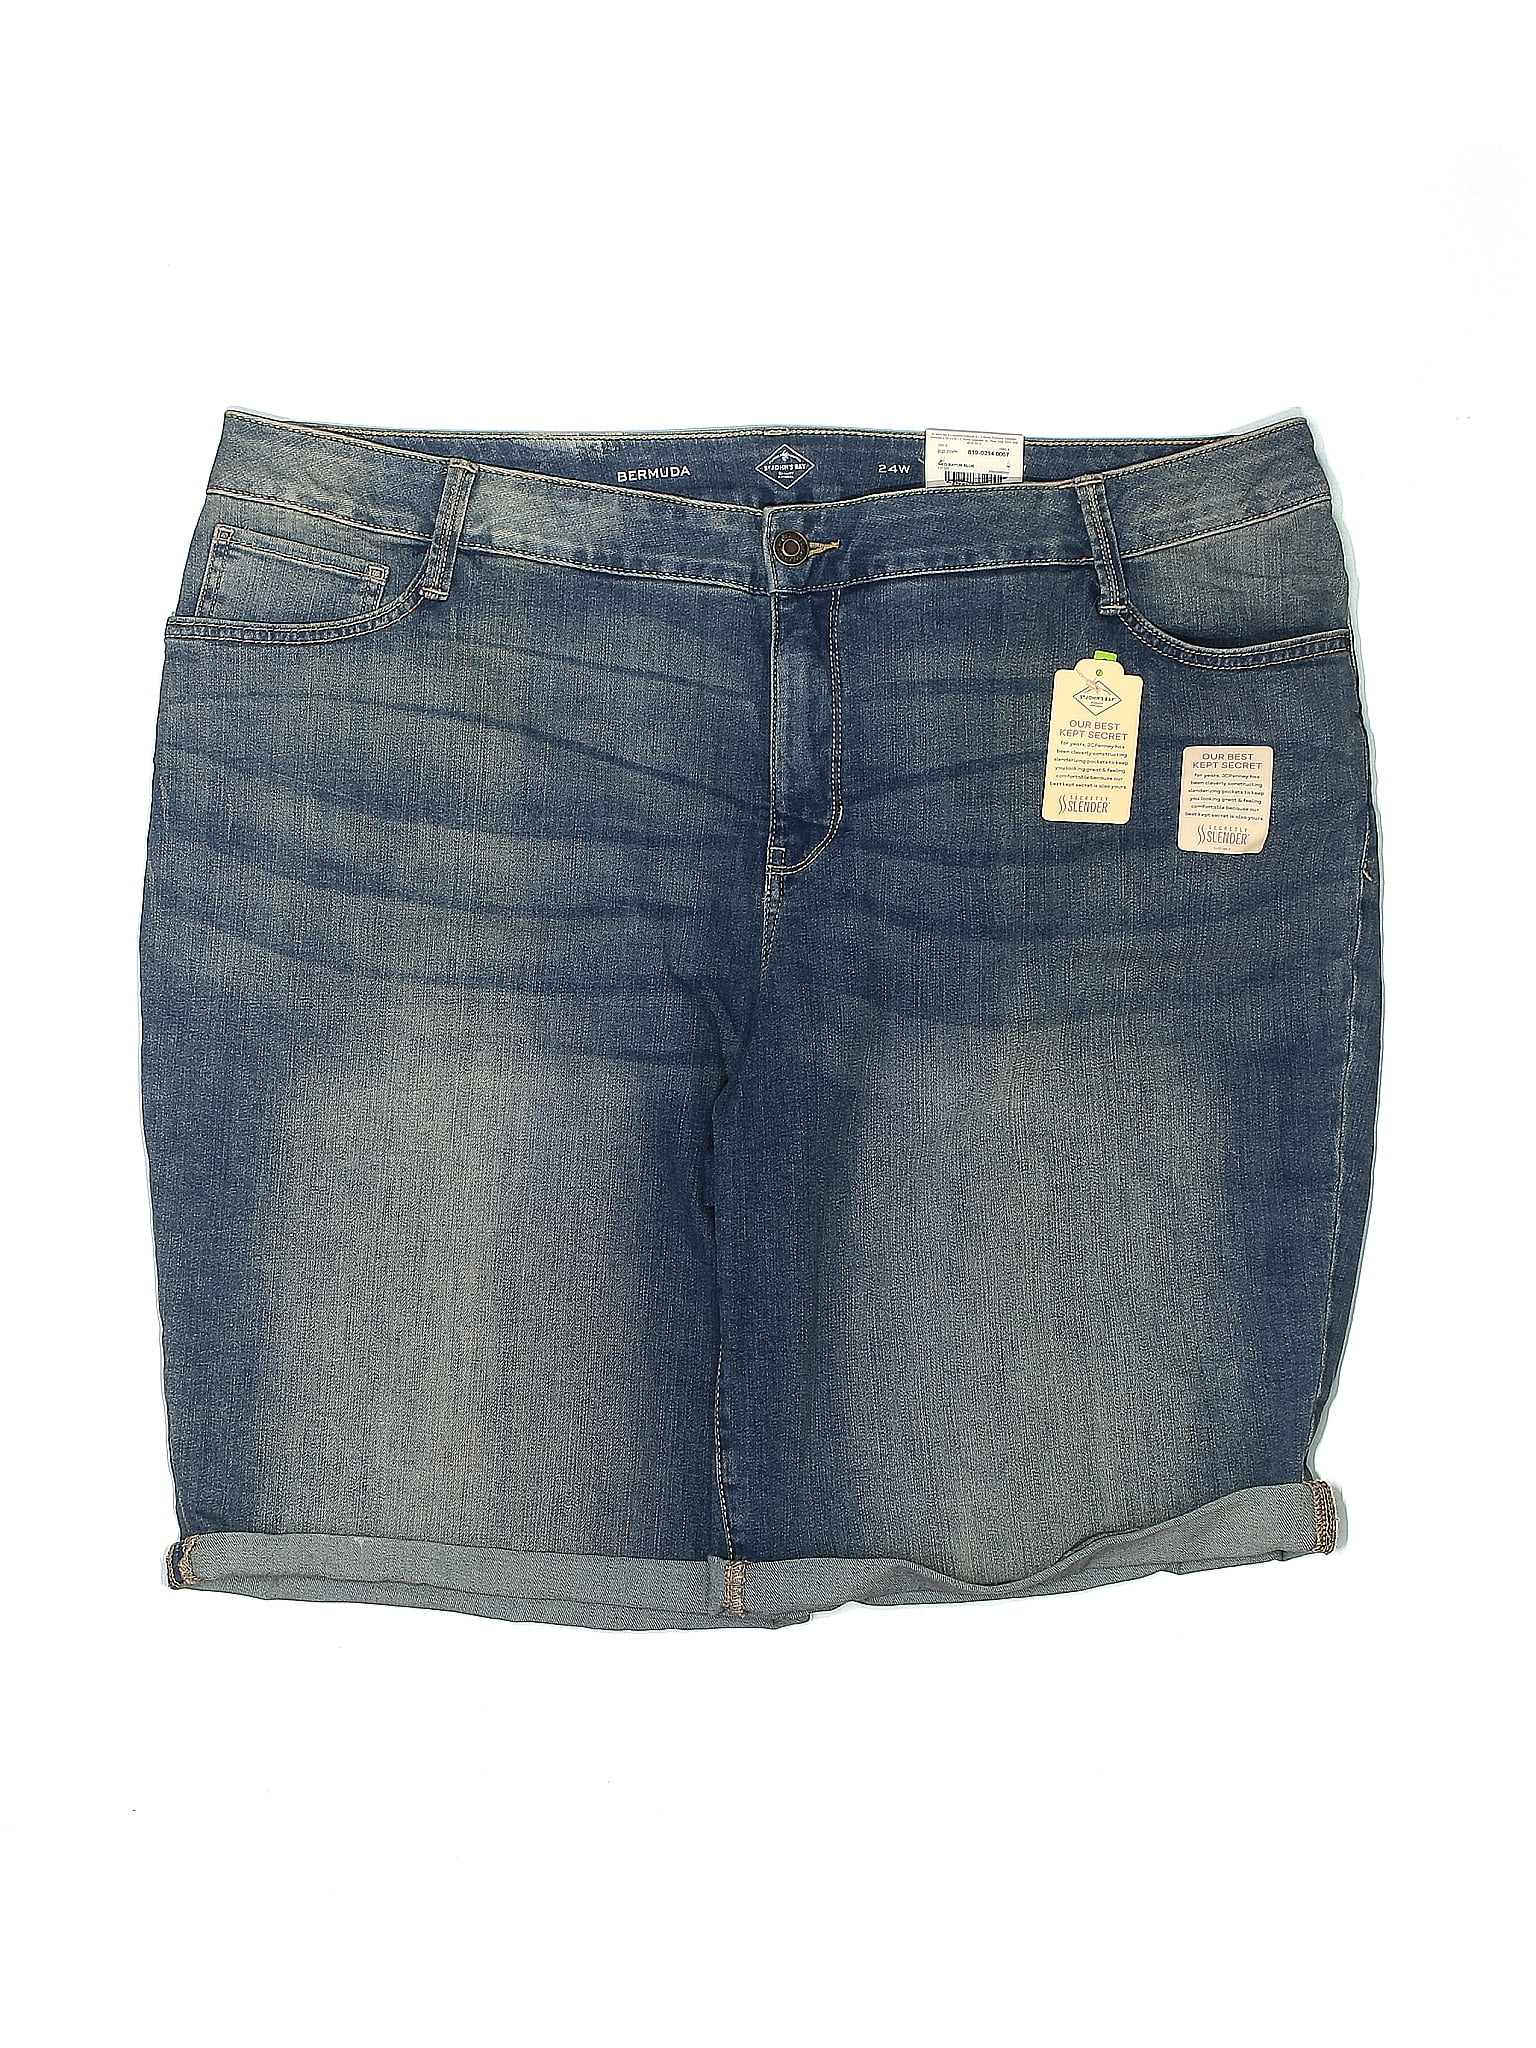 St. John's Bay Solid Blue Denim Shorts Size 24 (Plus) - 50% off | thredUP